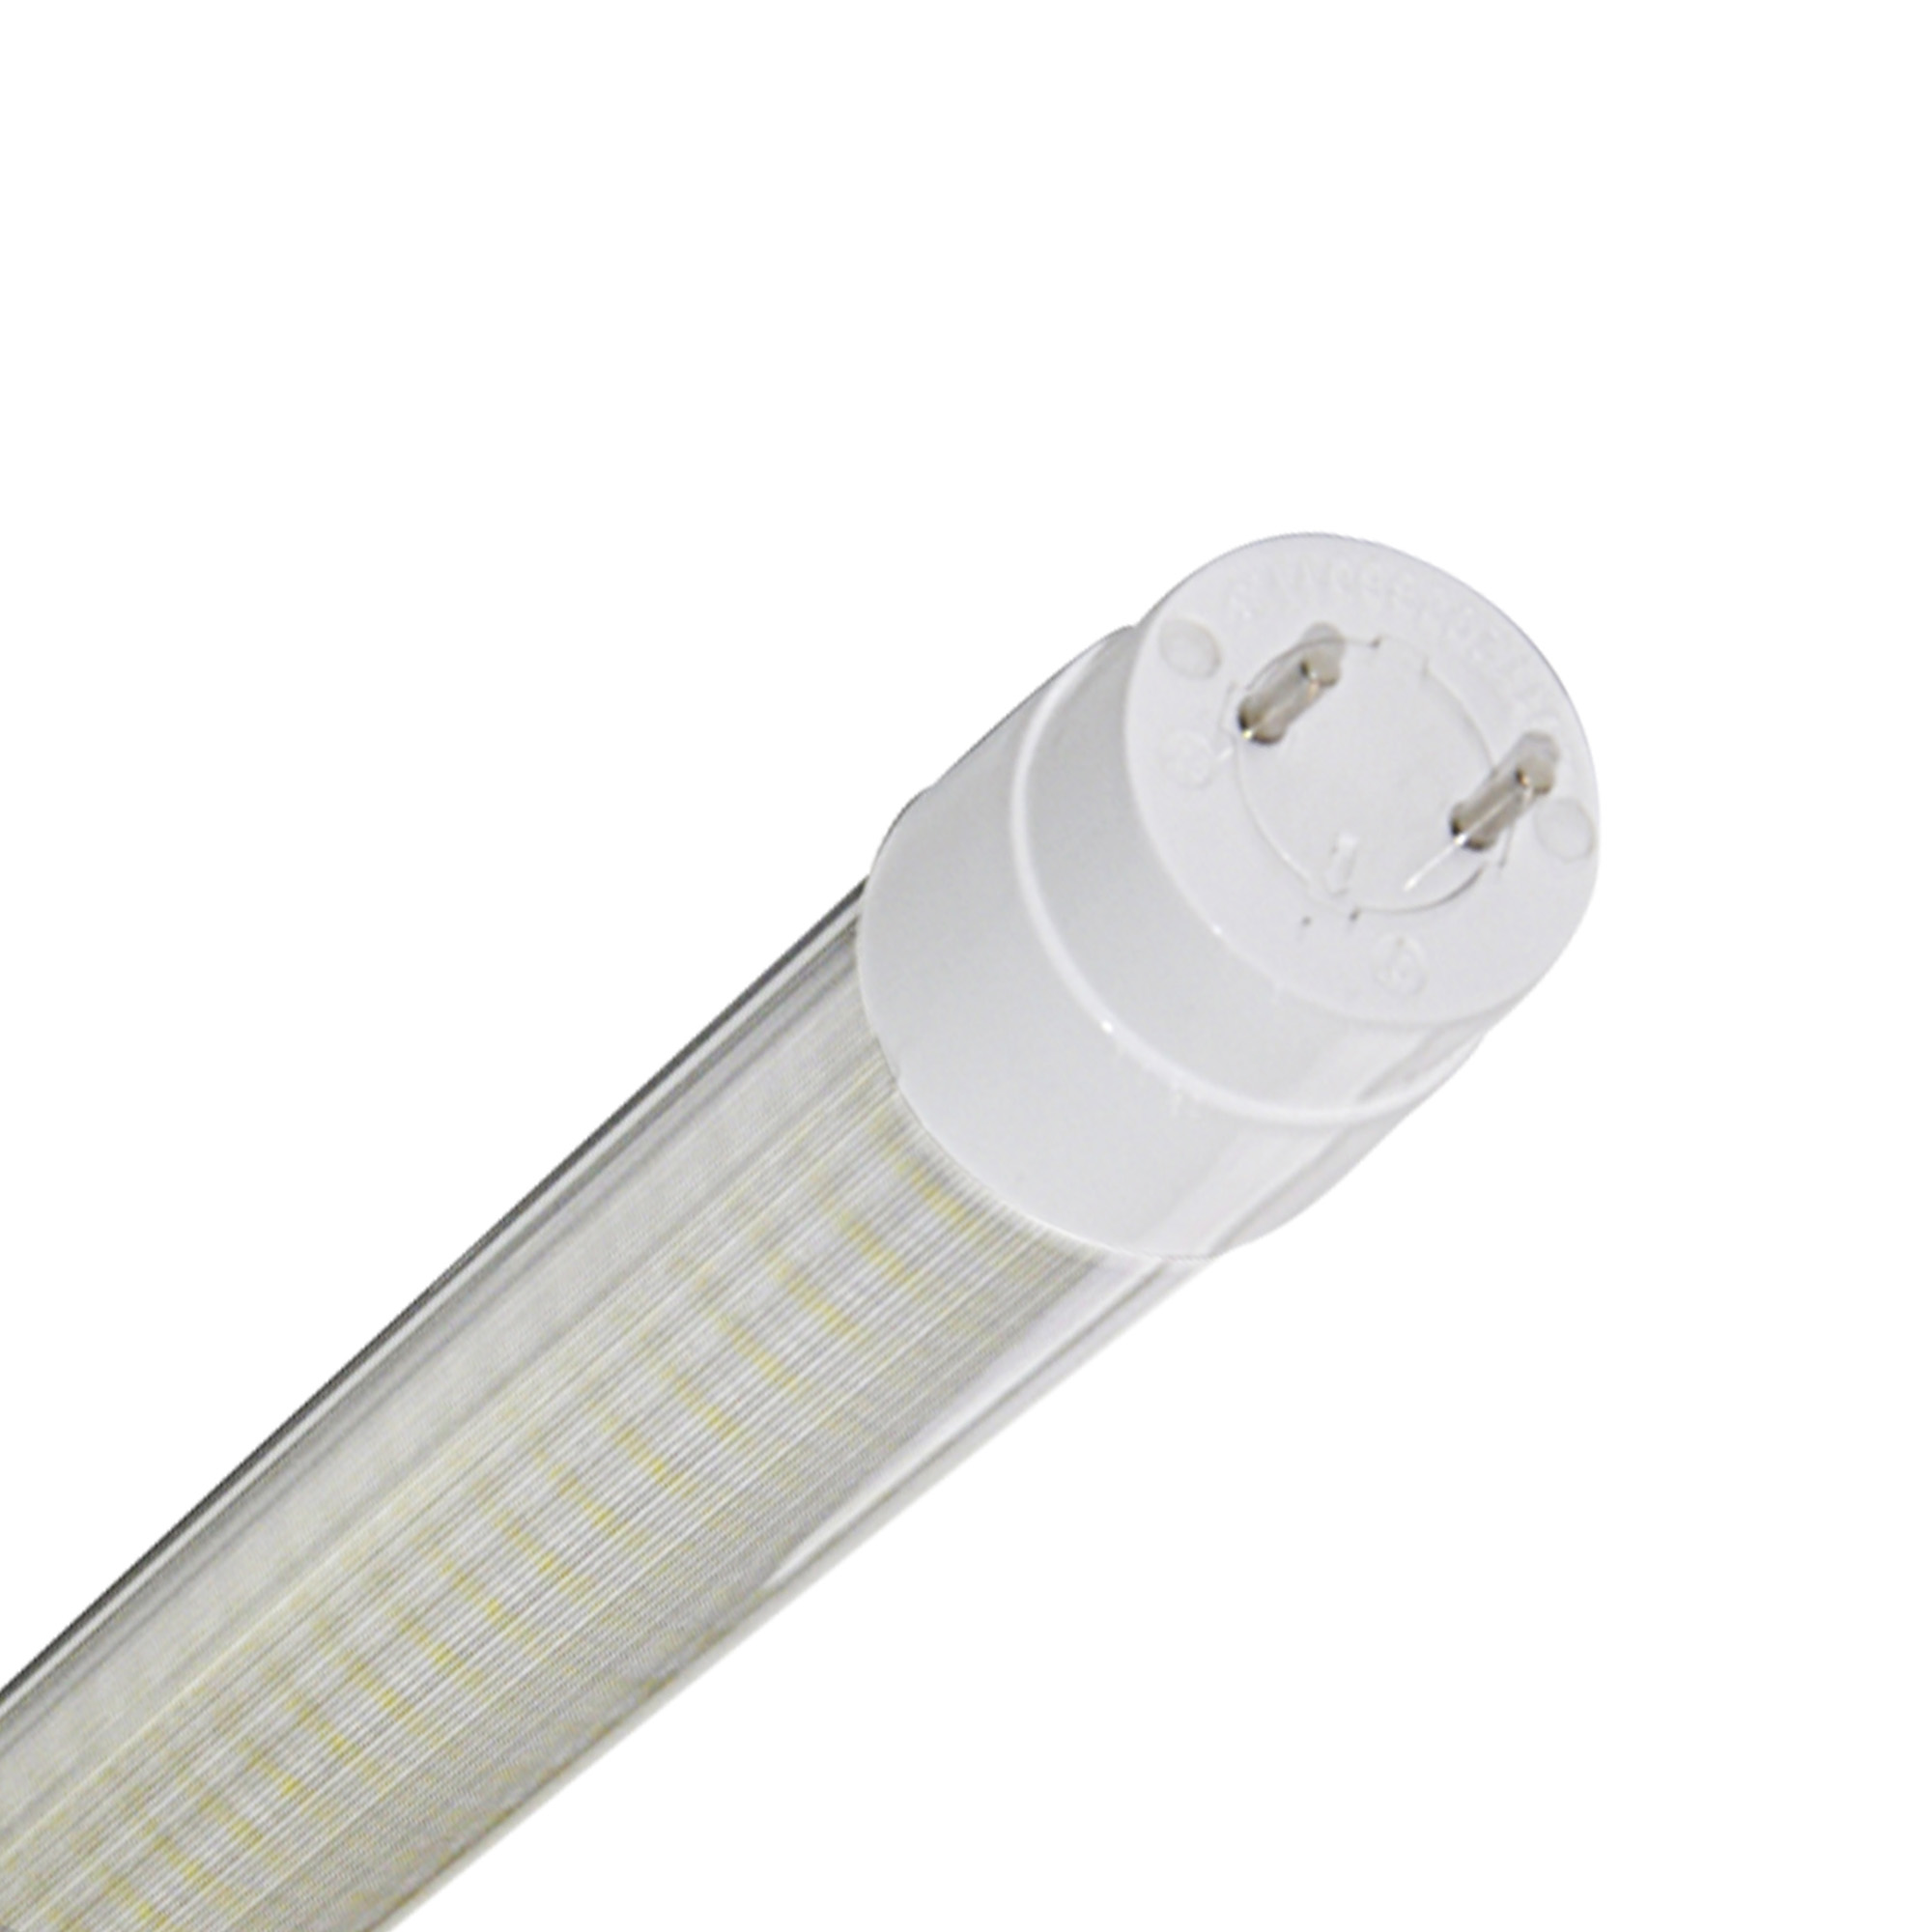 ETL led tube light 18W 1750lm rotatable end cap